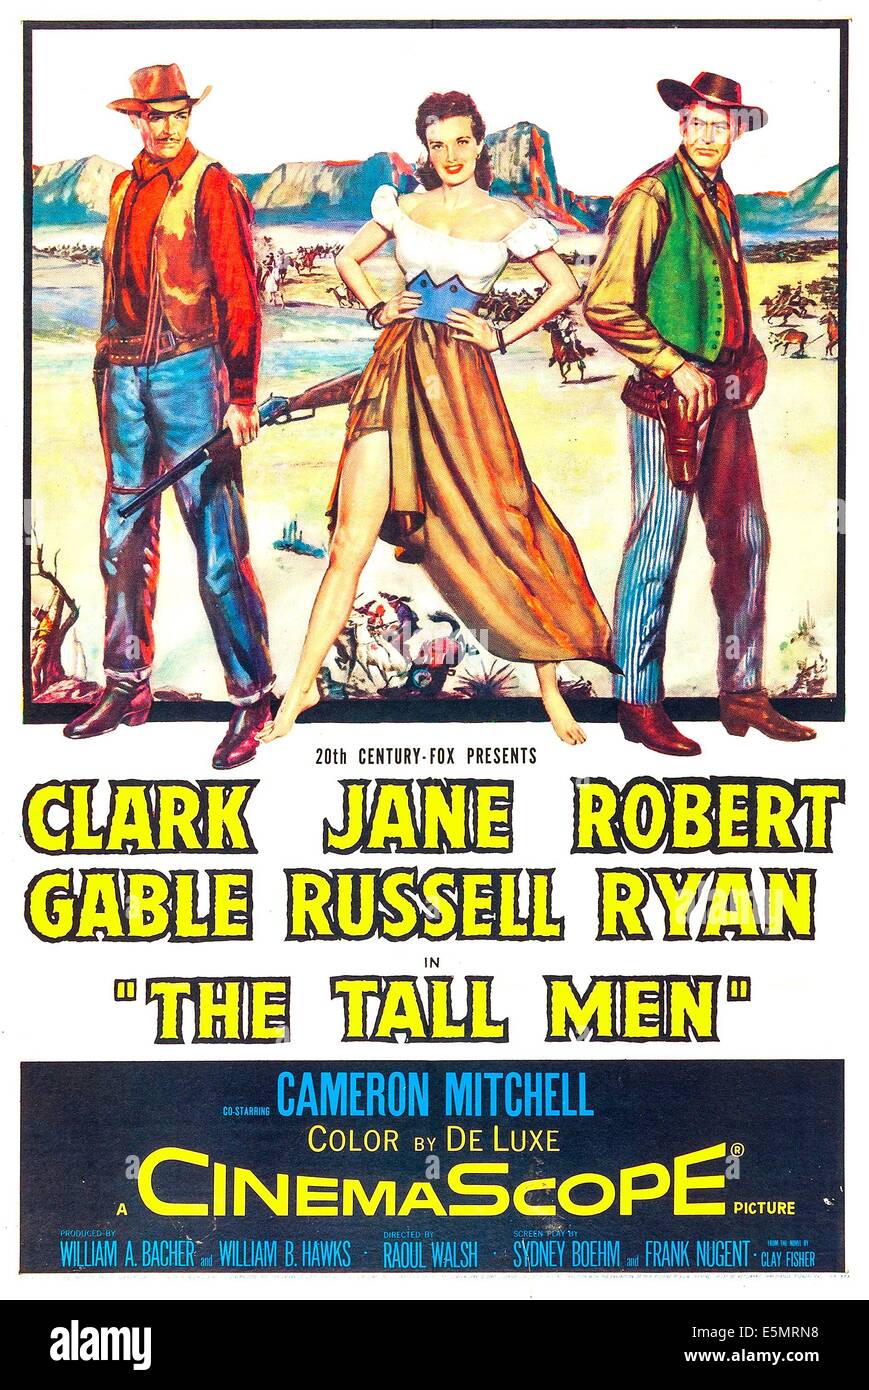 THE TALL MEN, US poster art, Clarke Gable, Jane Russell, Robert Ryan,1955.  TM and copyright 20th Century Fox Film Corp.  All Stock Photo